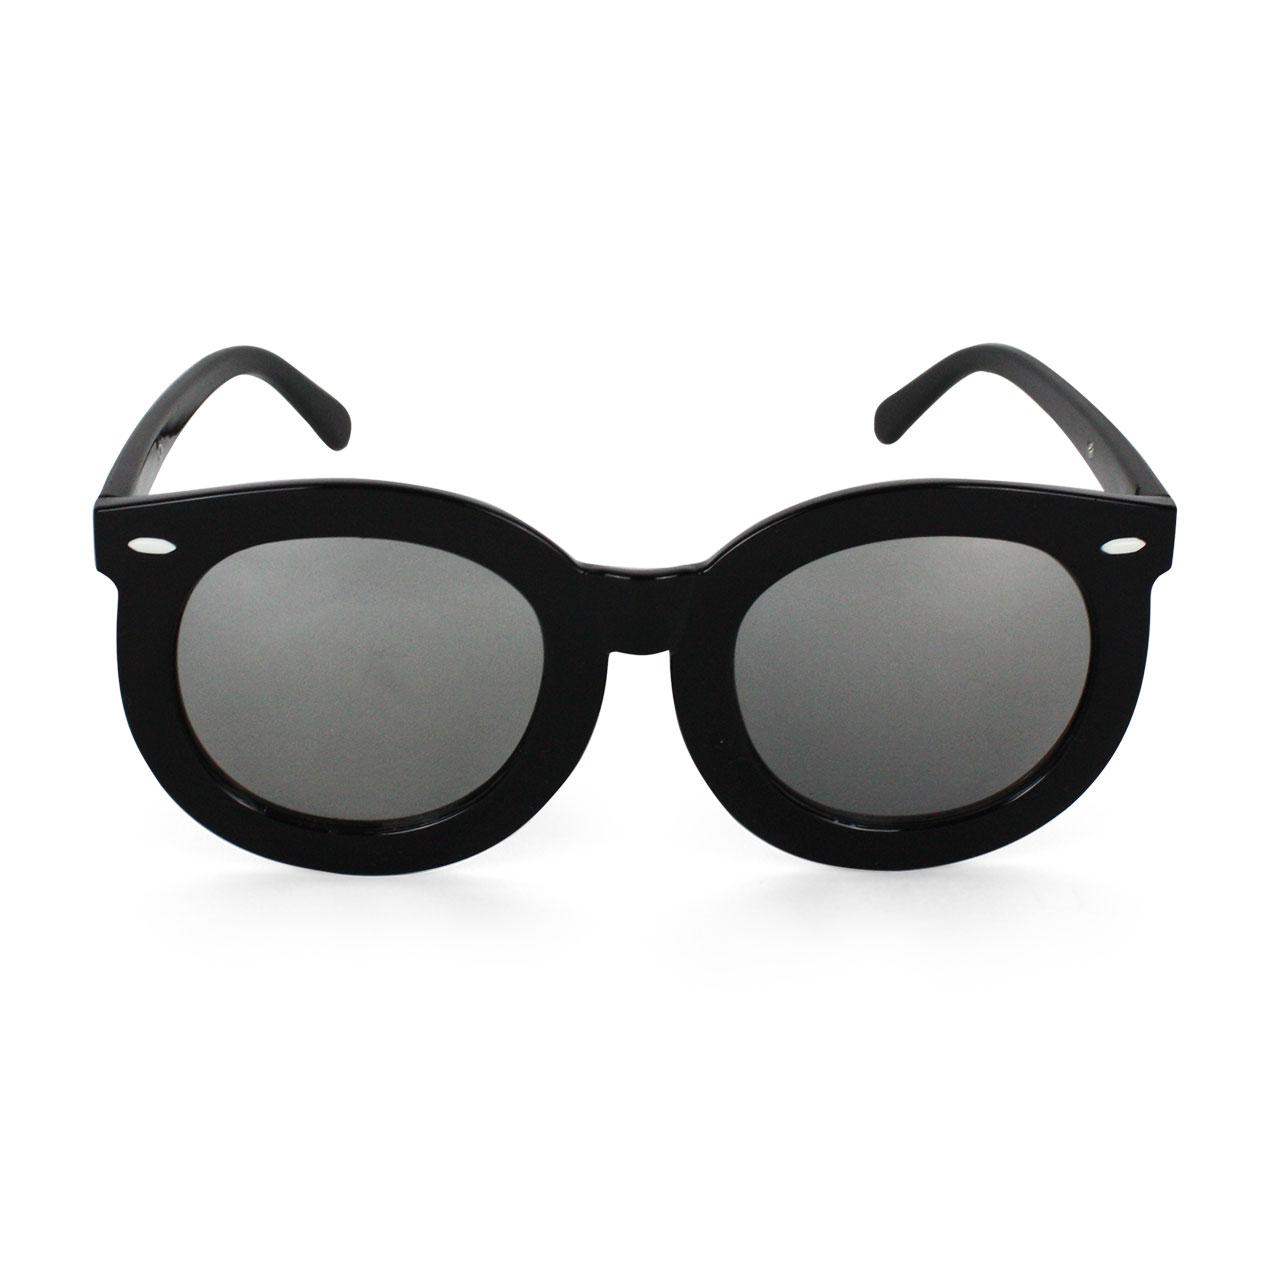 White Arrow Stylish New Round Smoke Wayfarer Sunglasses